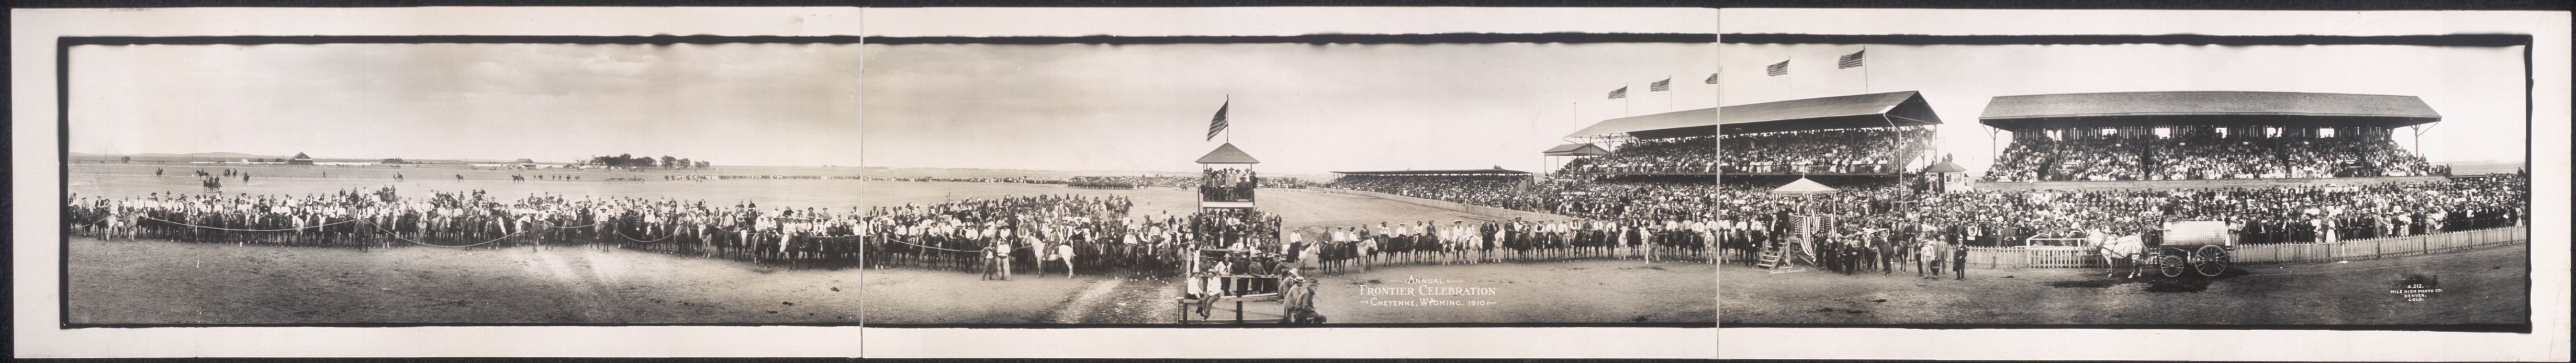 Annual Frontier Celebration, Cheyenne, Wyoming, 1910